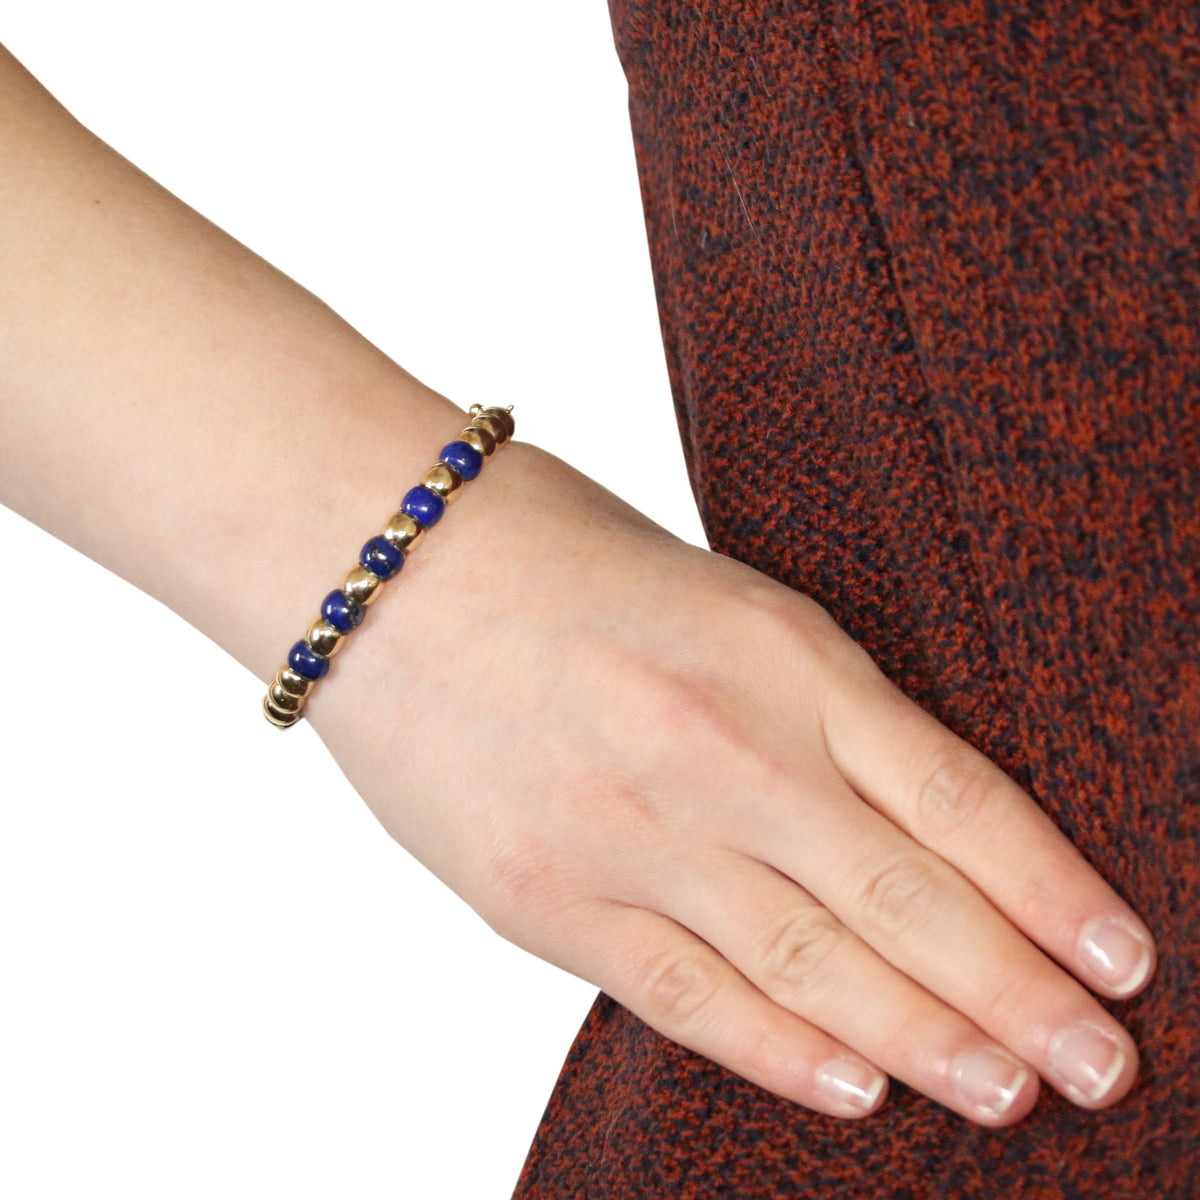 Lapis Lazuli Vintage Bracelet